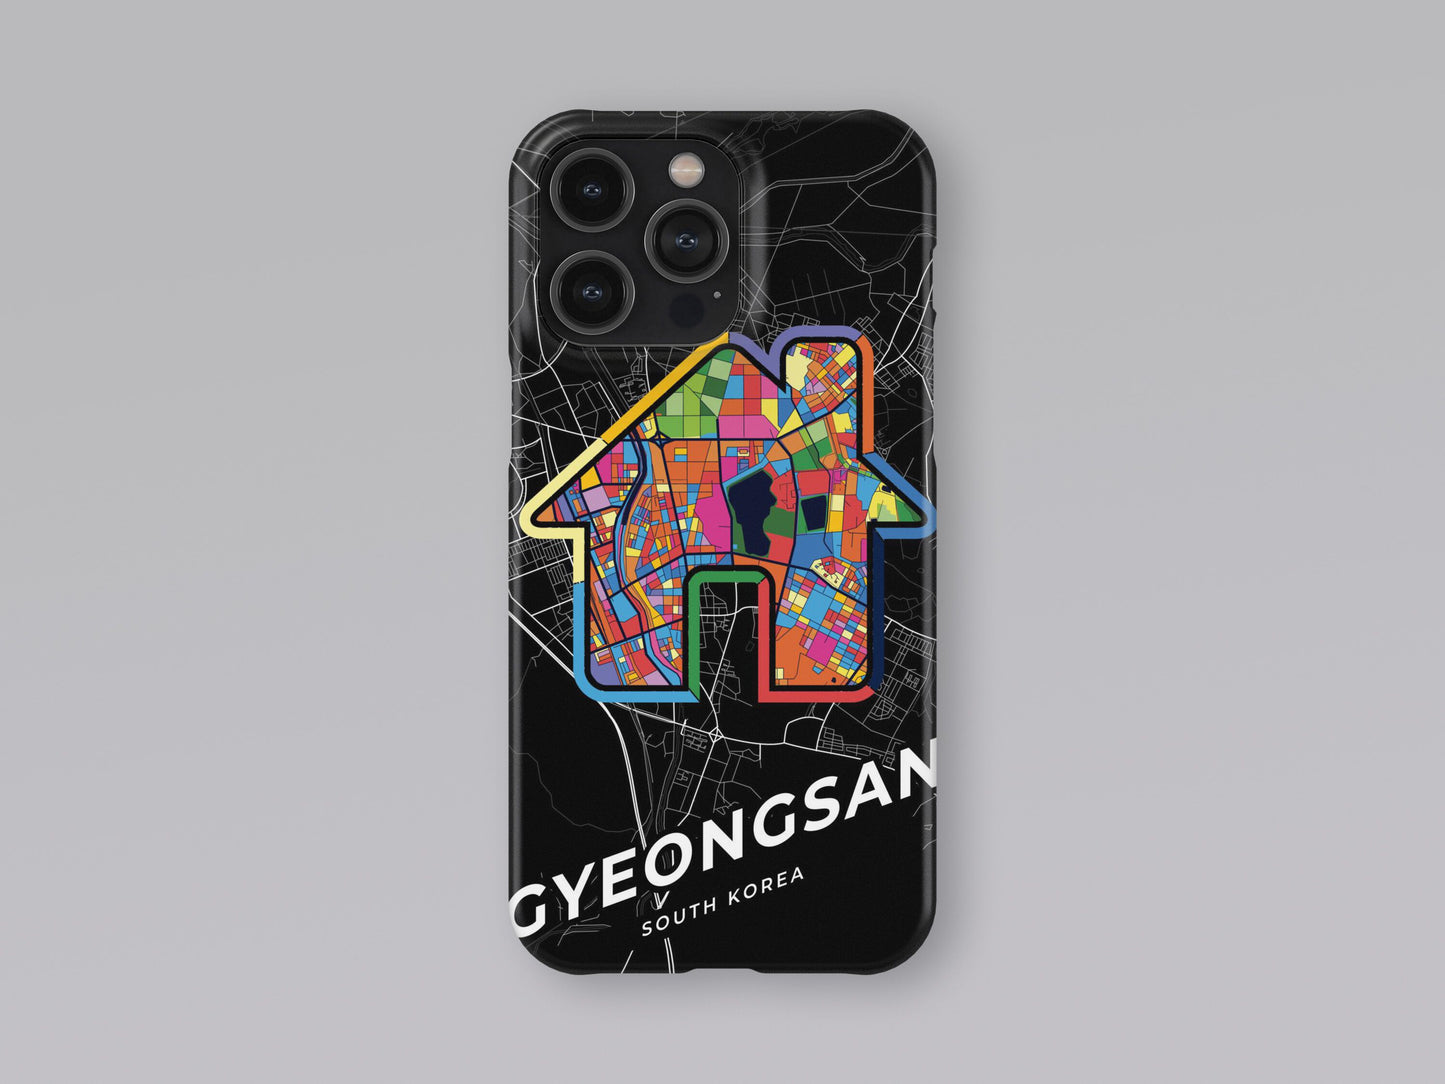 Gyeongsan South Korea slim phone case with colorful icon. Birthday, wedding or housewarming gift. Couple match cases. 3